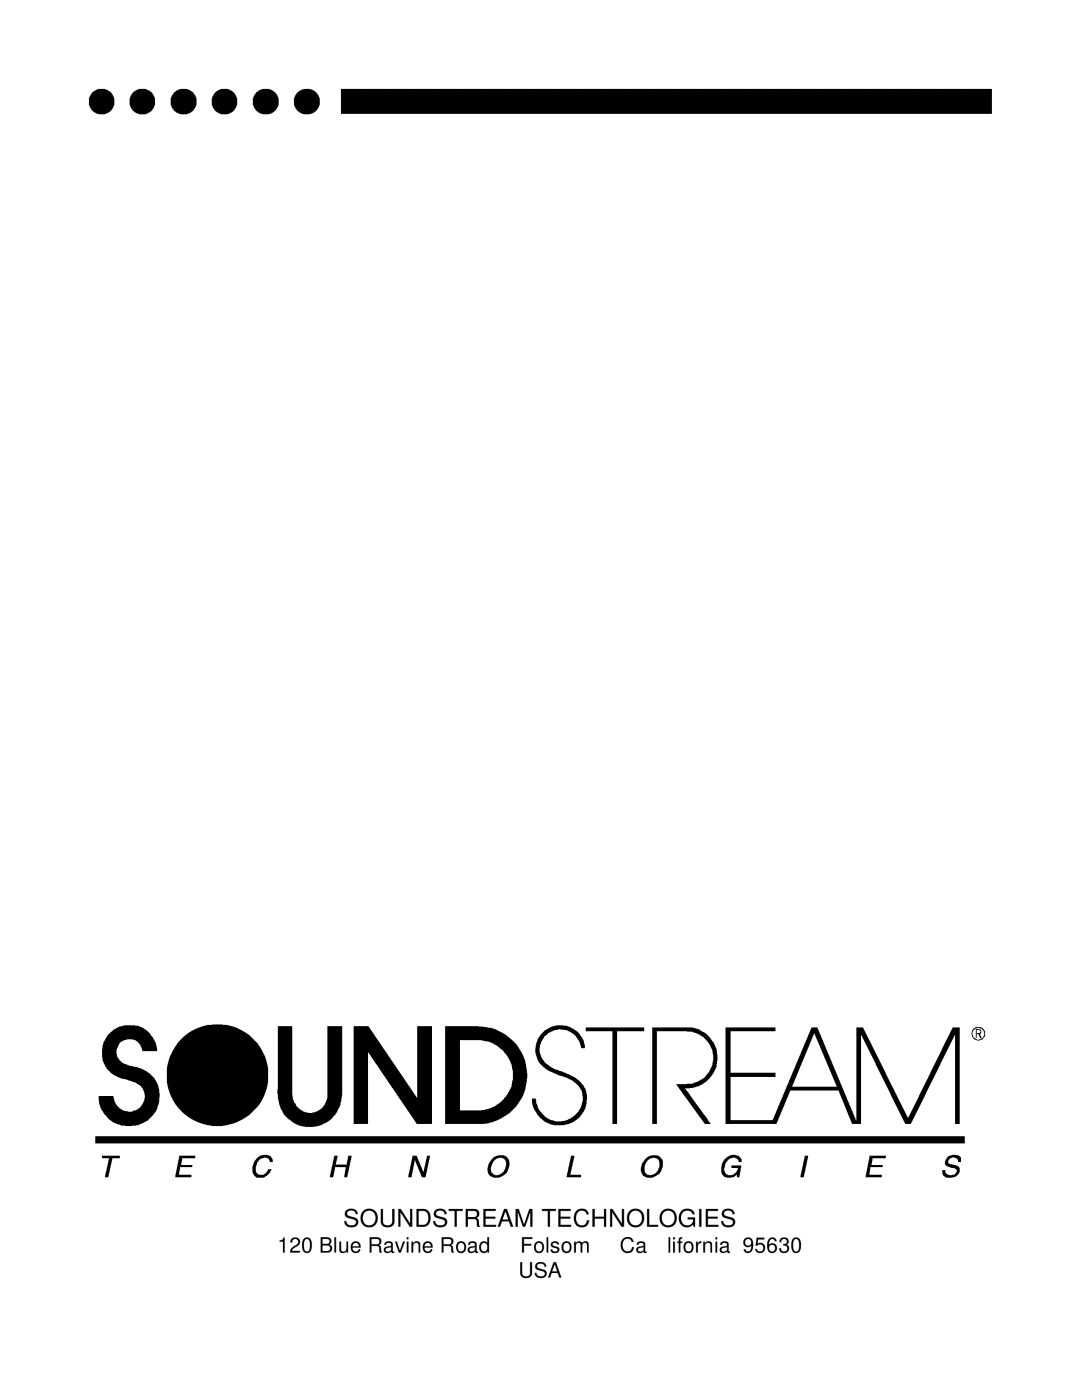 Soundstream Technologies 705s owner manual Soundstream Technologies, Blue Ravine Road Folsom Ca lifornia USA 